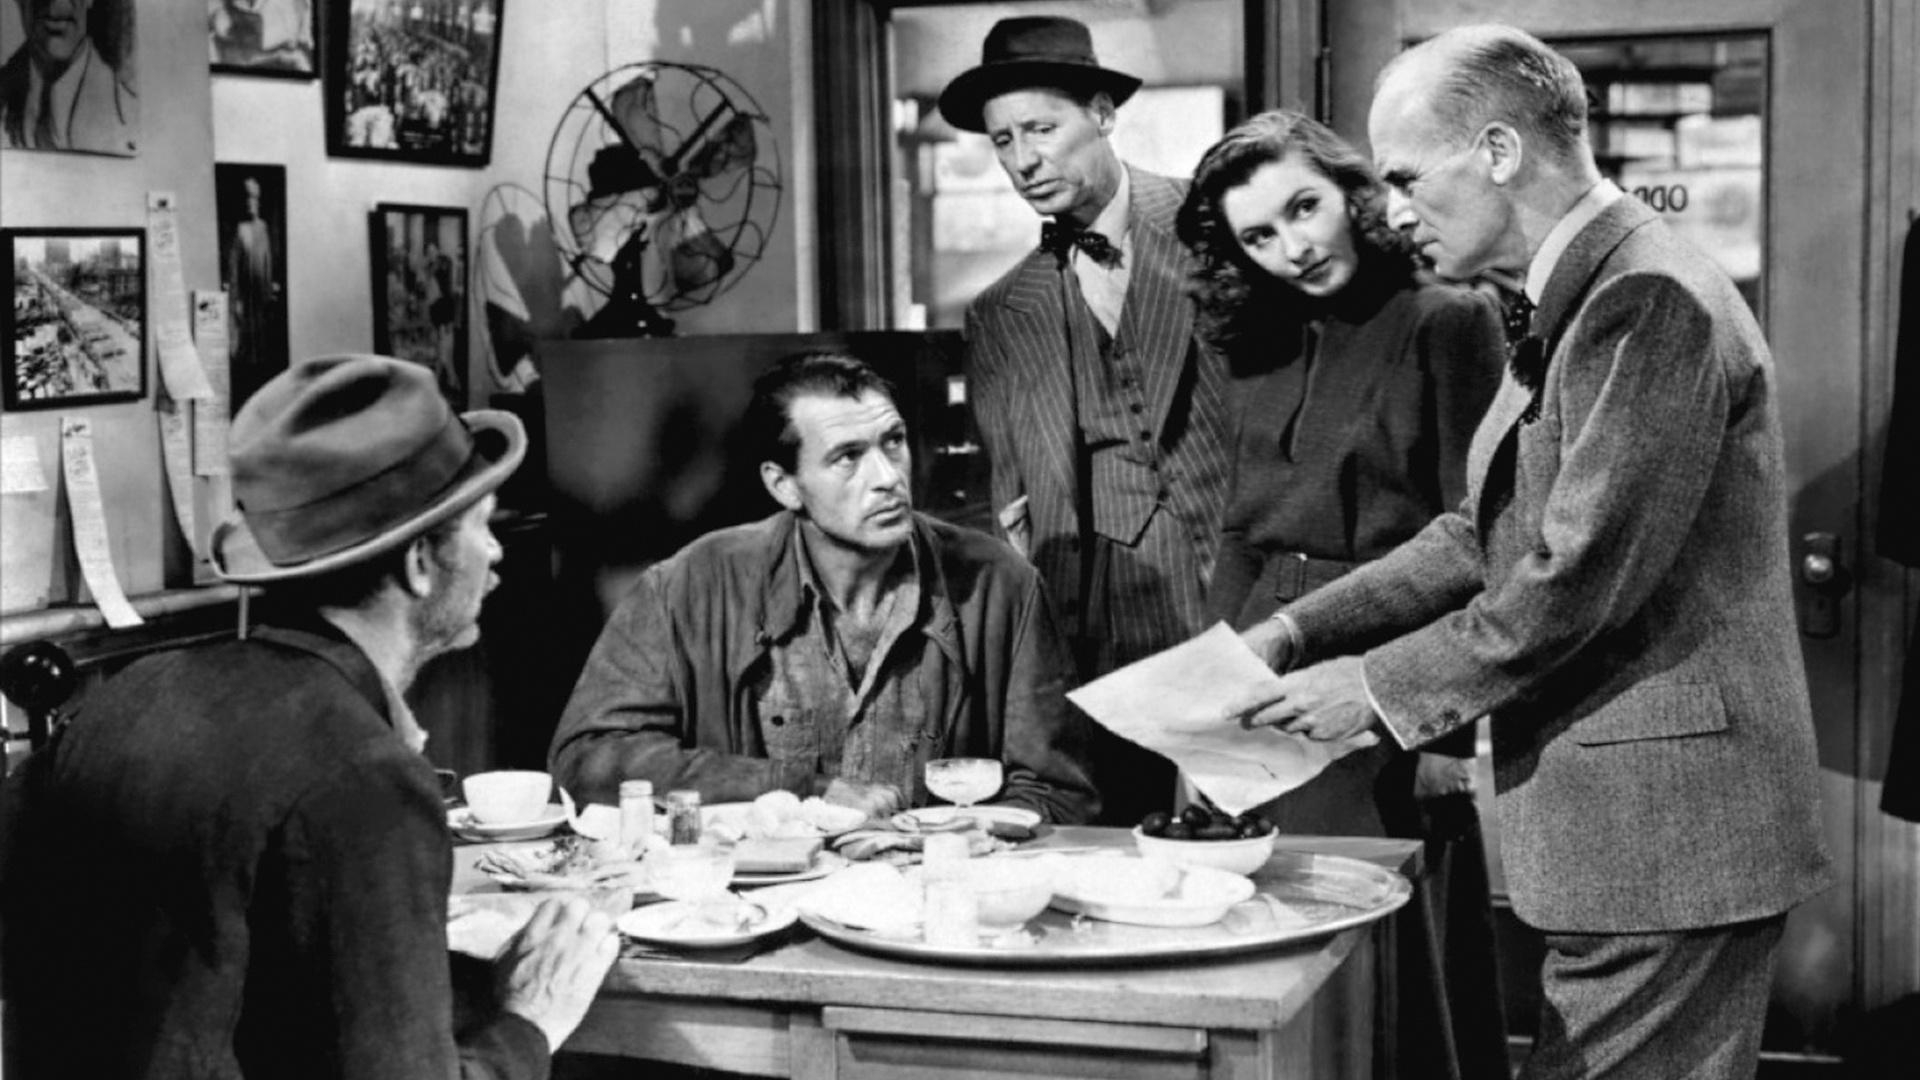 Meet John Doe (1941) - Turner Classic Movies